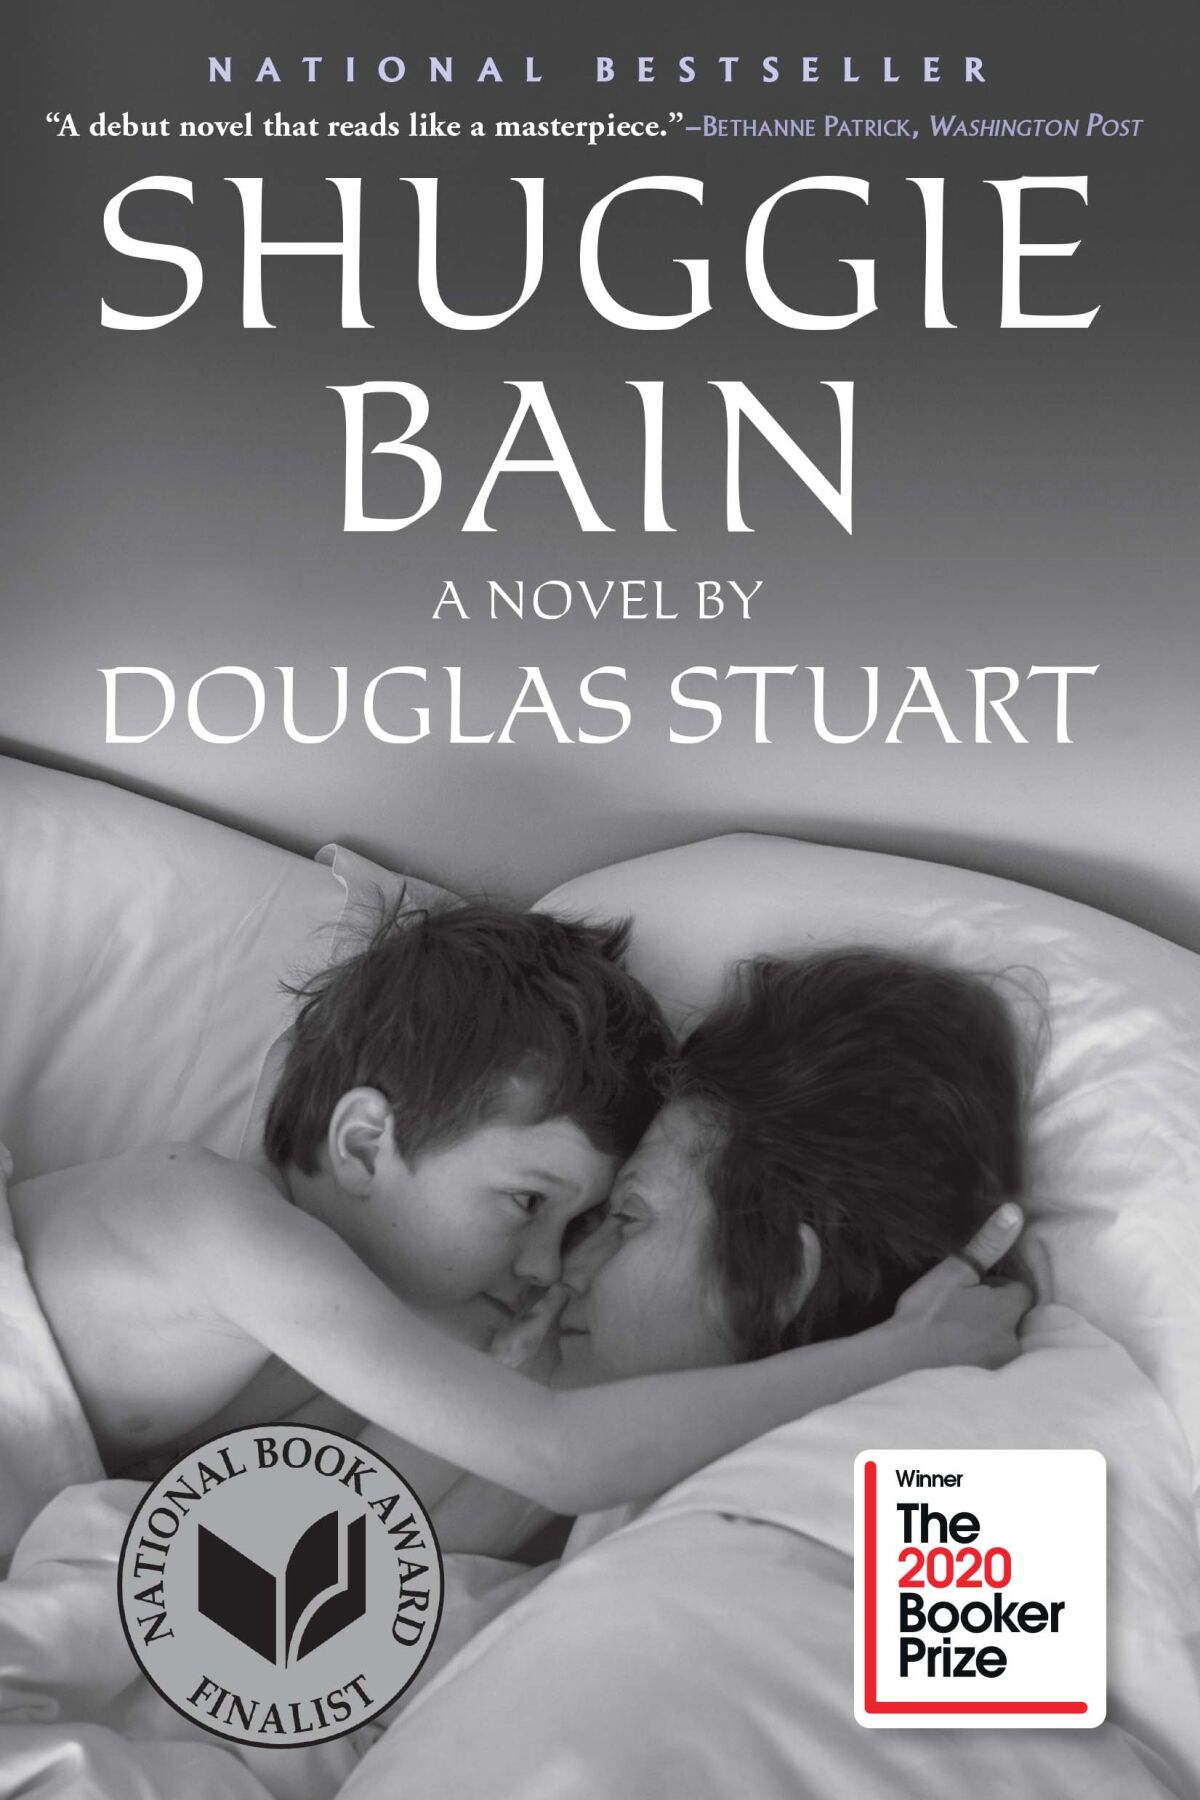 Douglas Stuart's "Shuggie Bain" took home the 2020 Booker Prize.